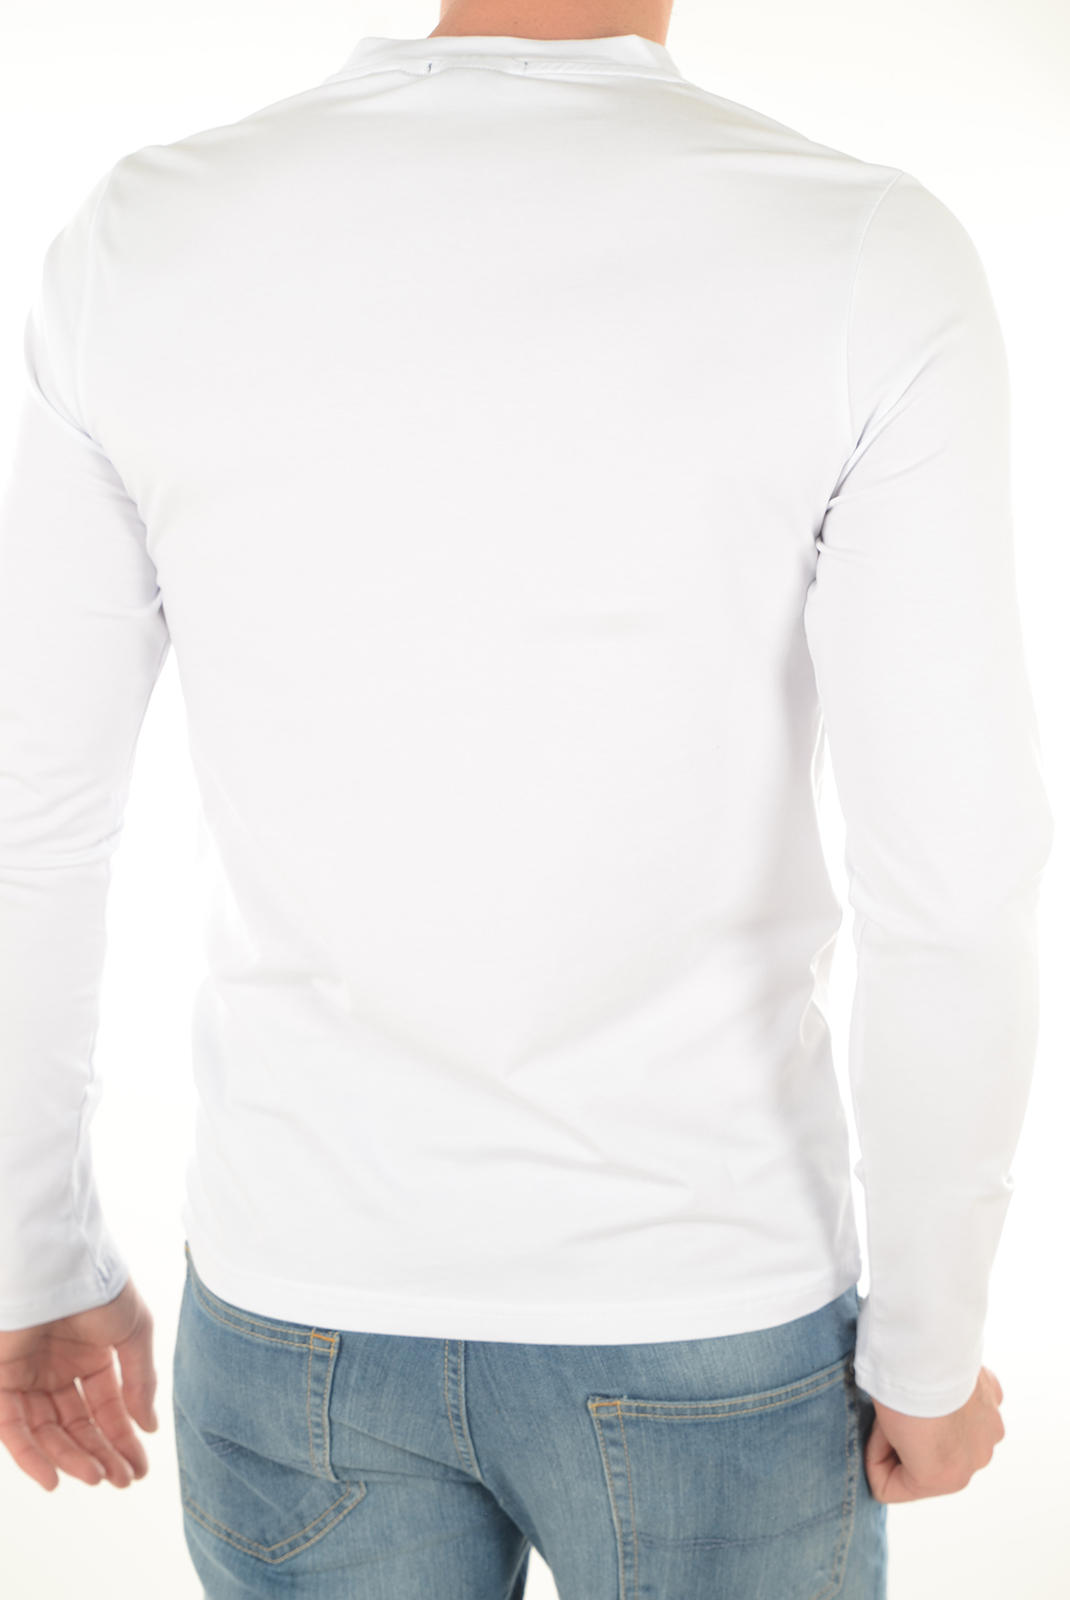 T-Shirt blanc homme - Redskins Wow Warner